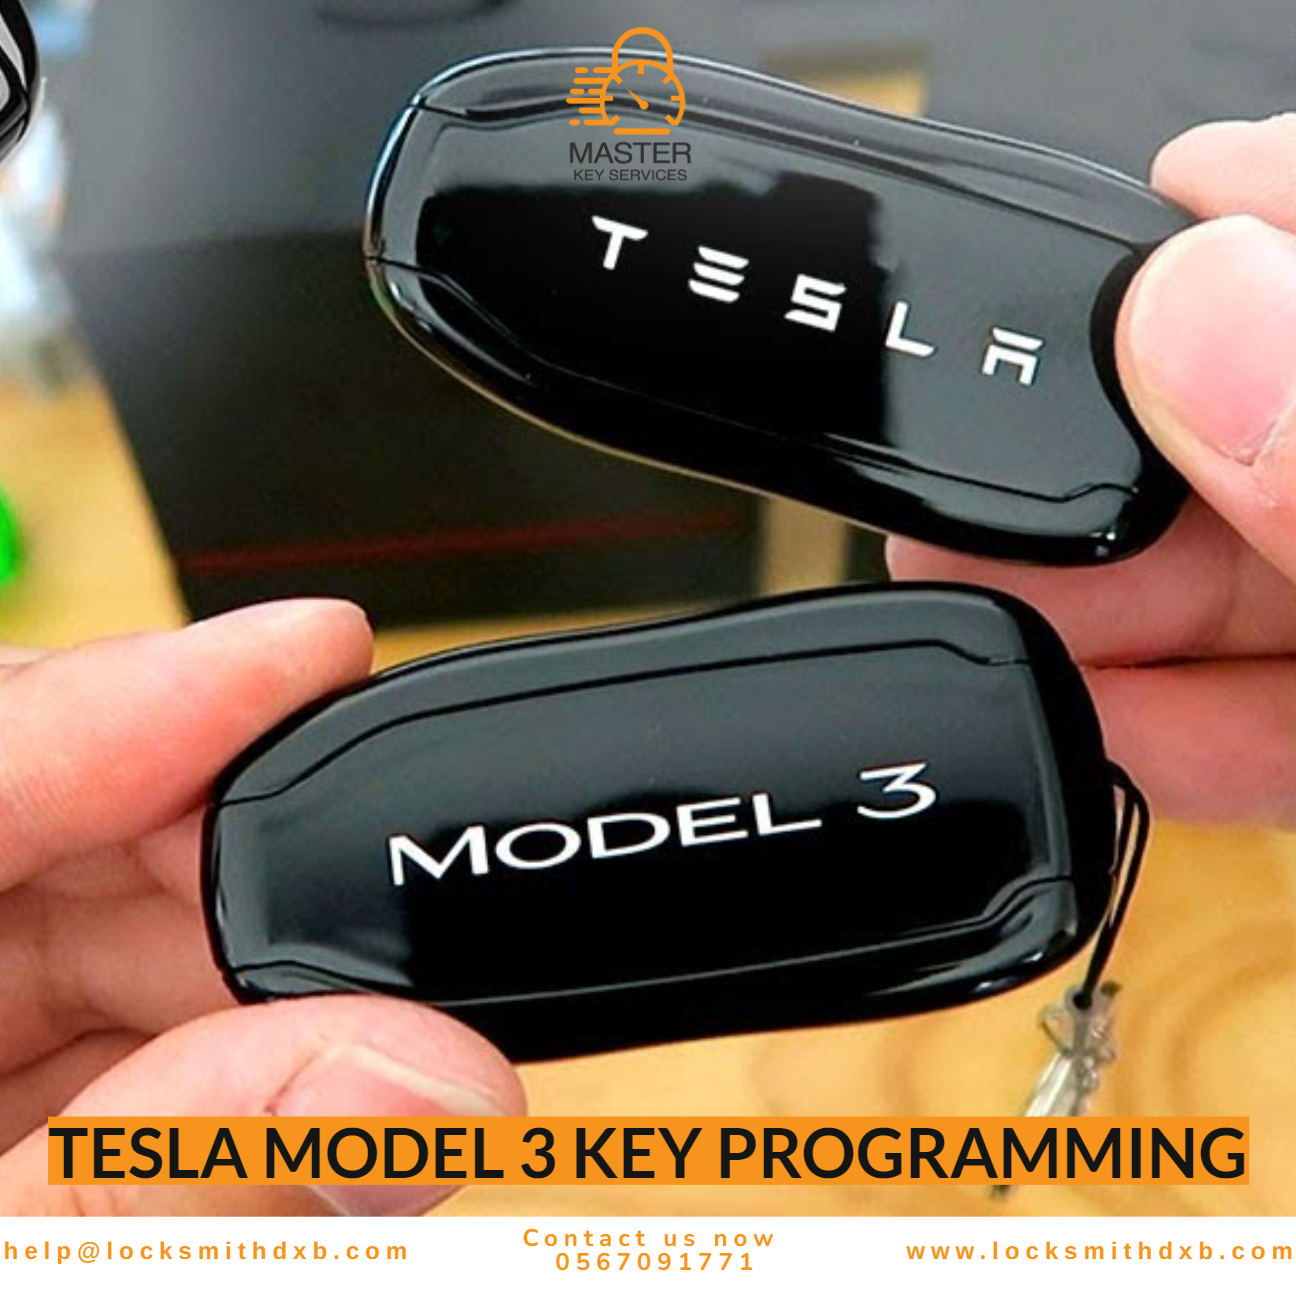 Tesla model 3 key programming